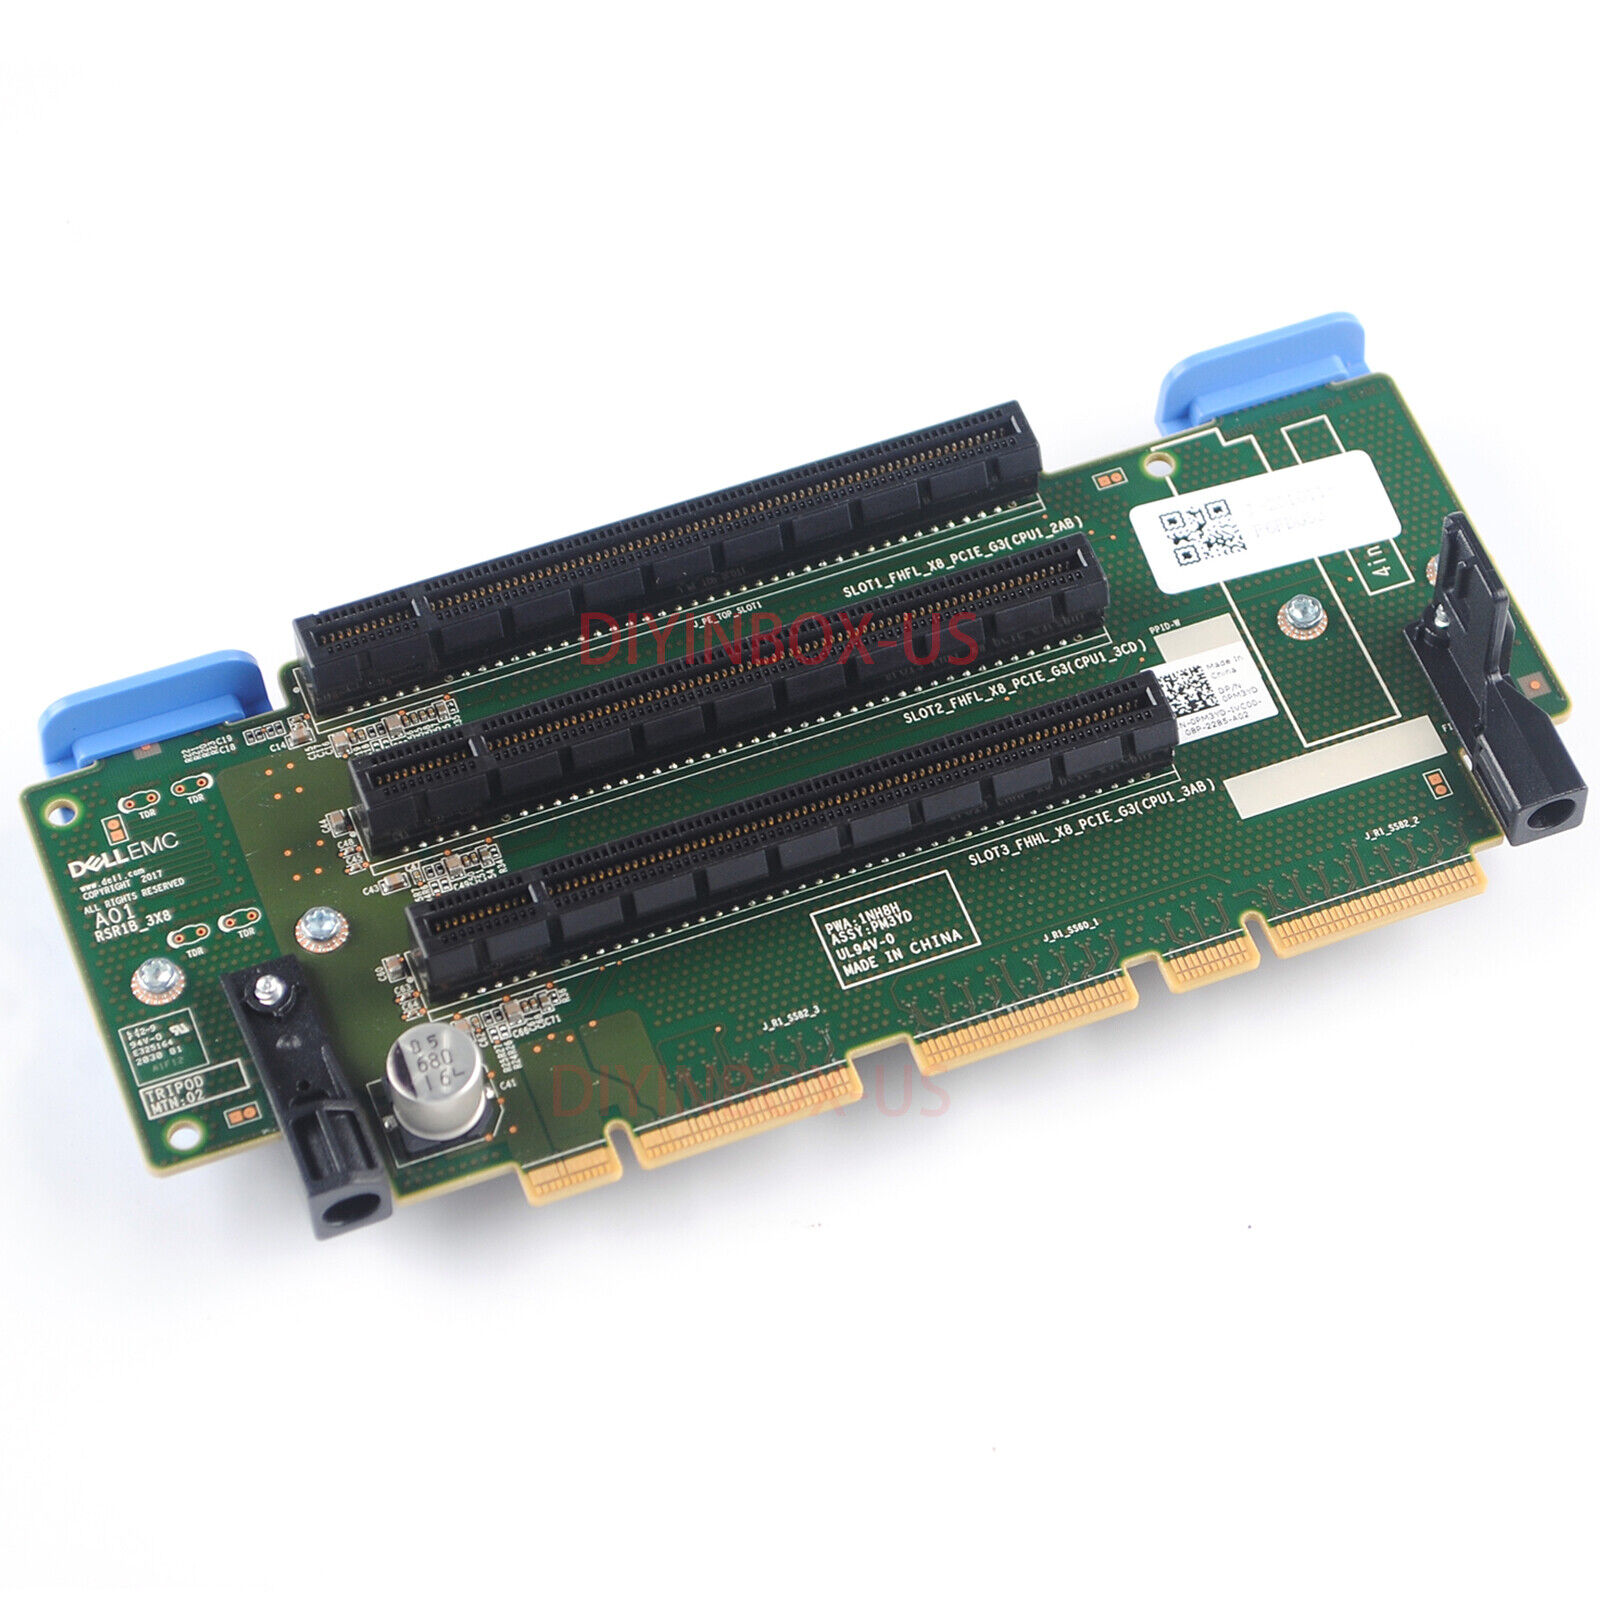 New DELL EMC POWEREDGE SERVER R740 R740XD CHASSIS RISER 1B 3X8 PCI PM3YD US 